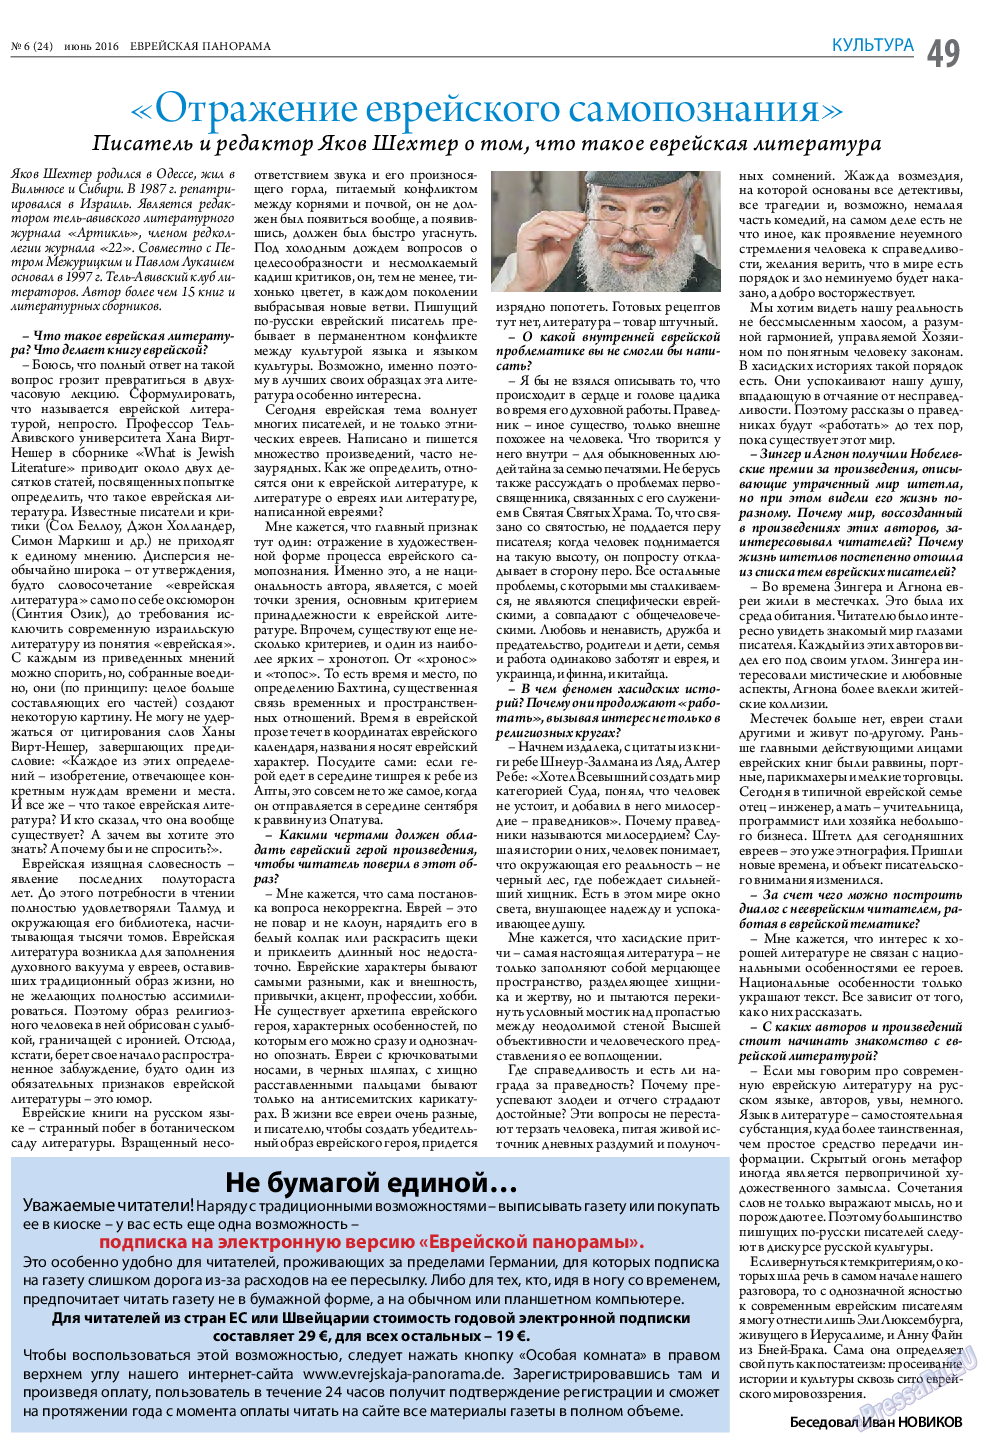 Еврейская панорама, газета. 2016 №6 стр.49